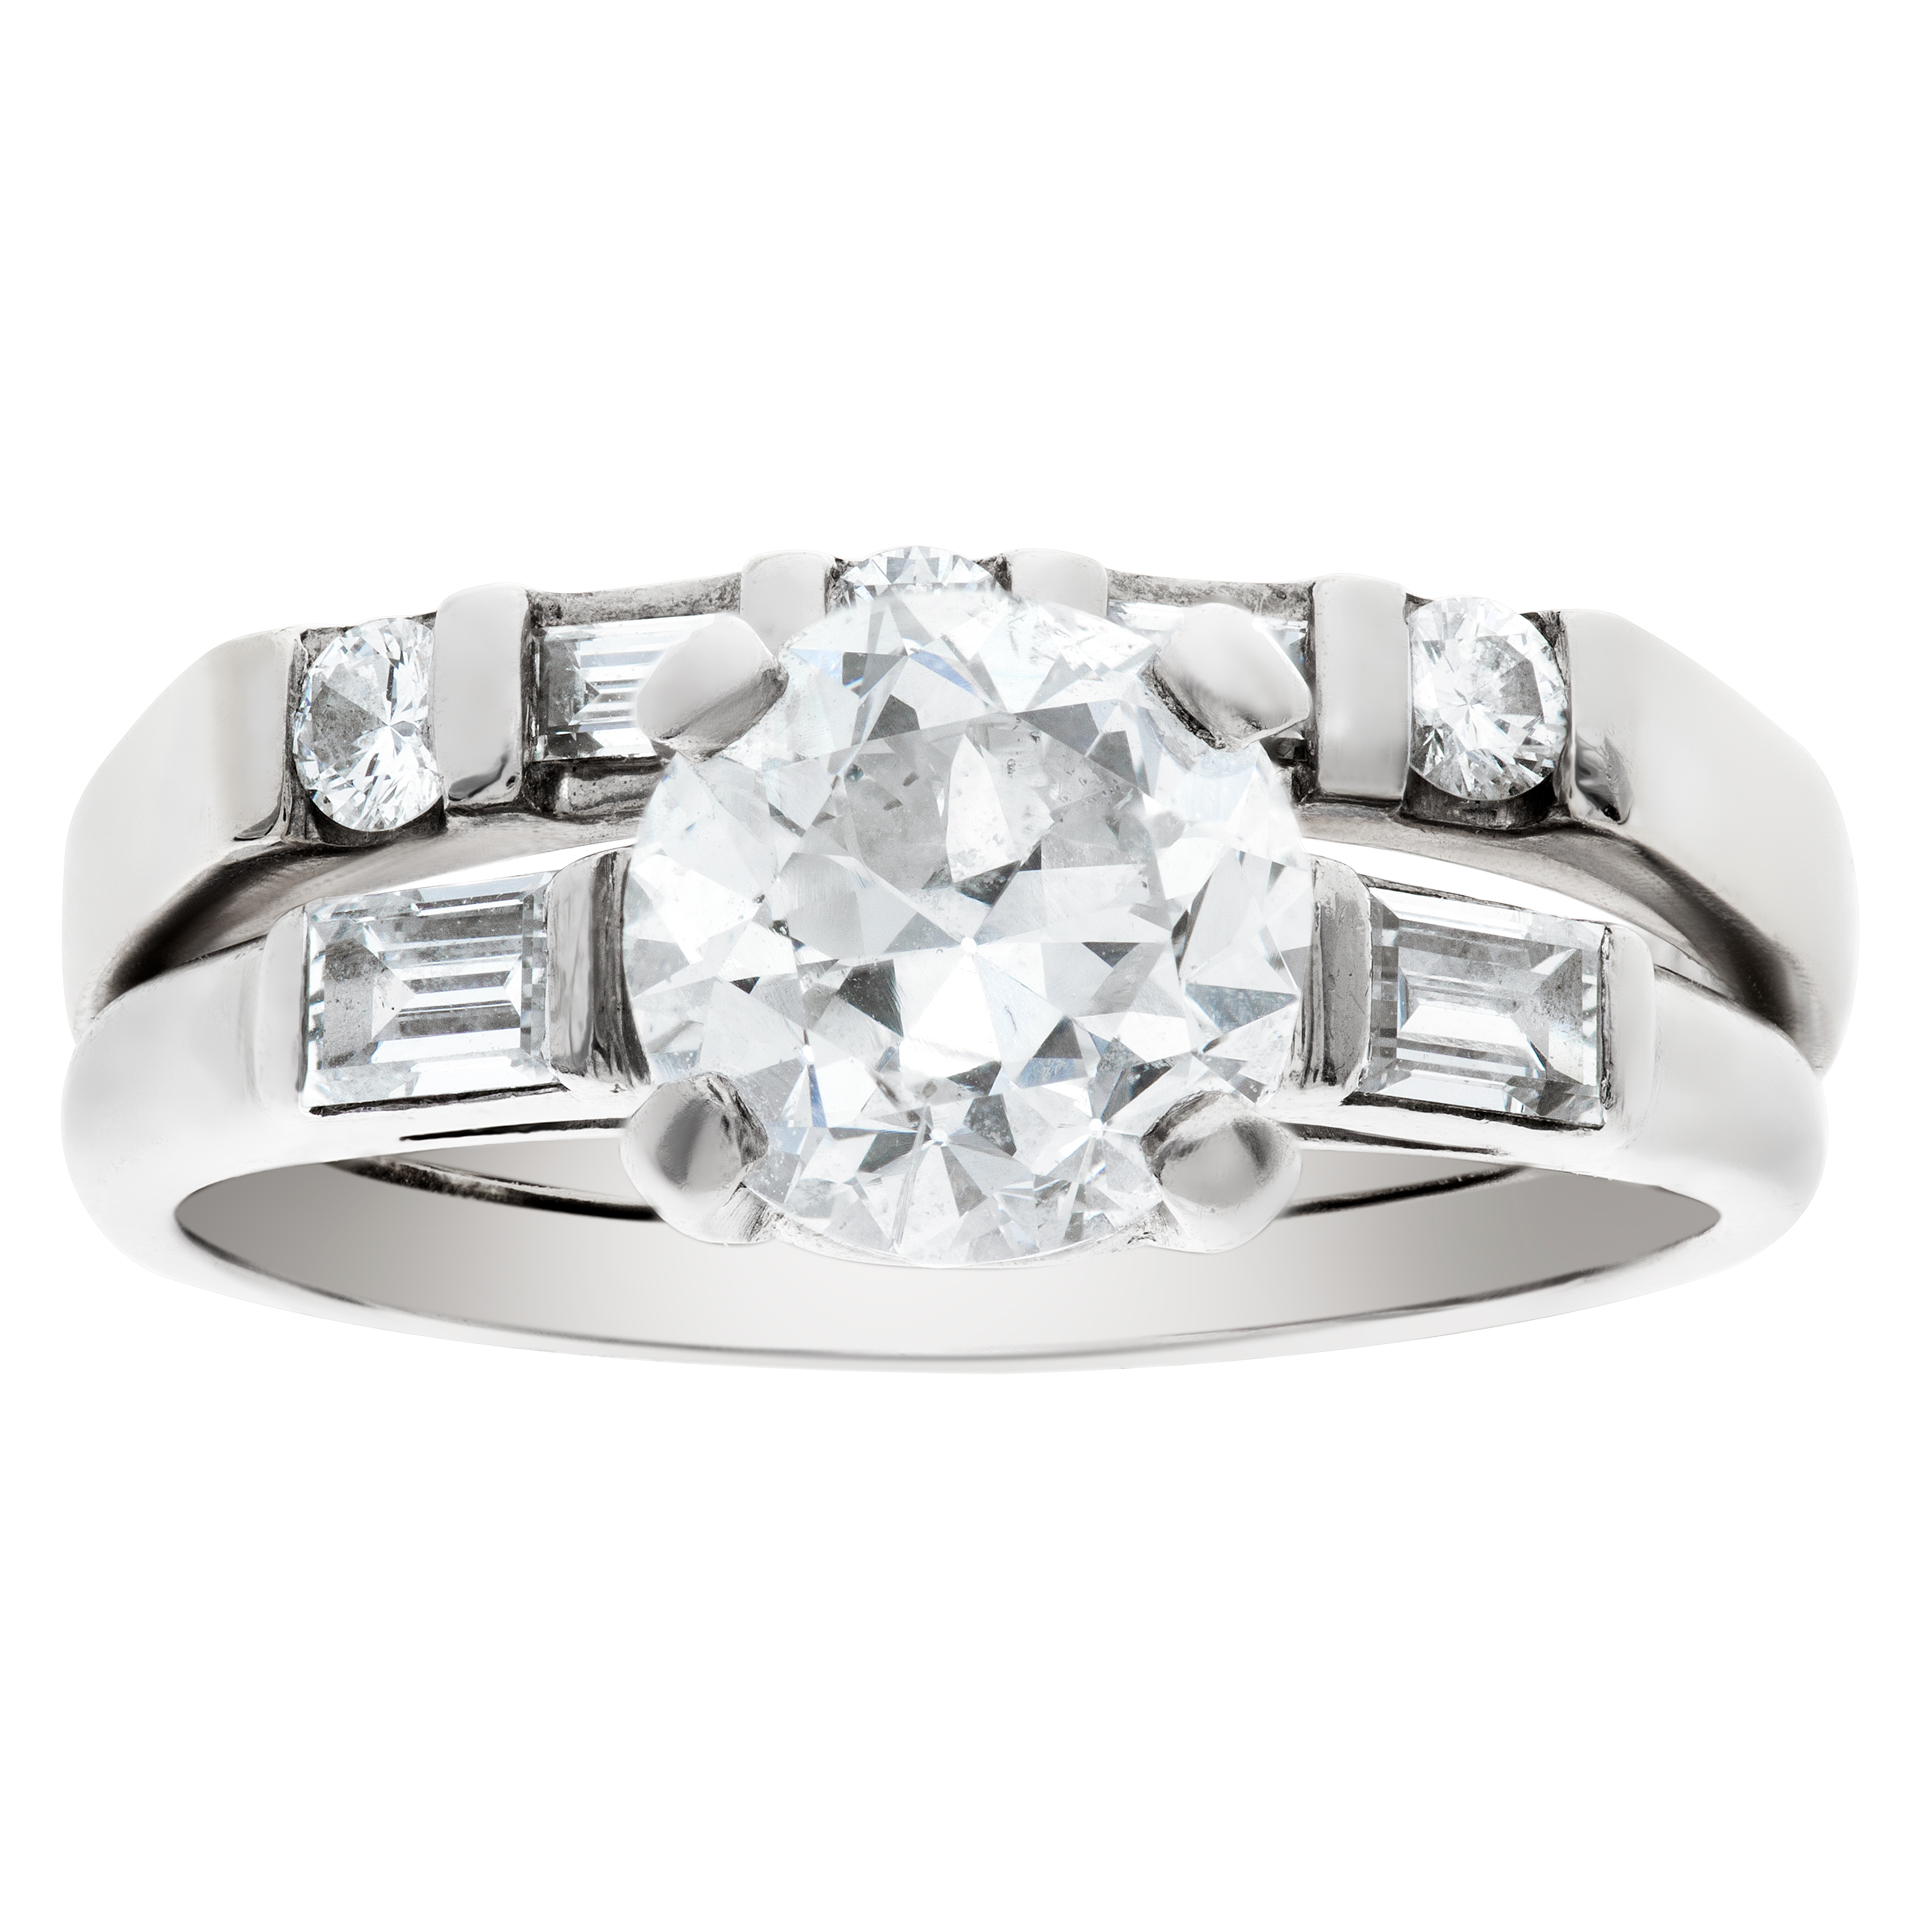 European-cut diamond ring. 1.2 cts center diamond (J color, I1 clarity) in 14k white gold